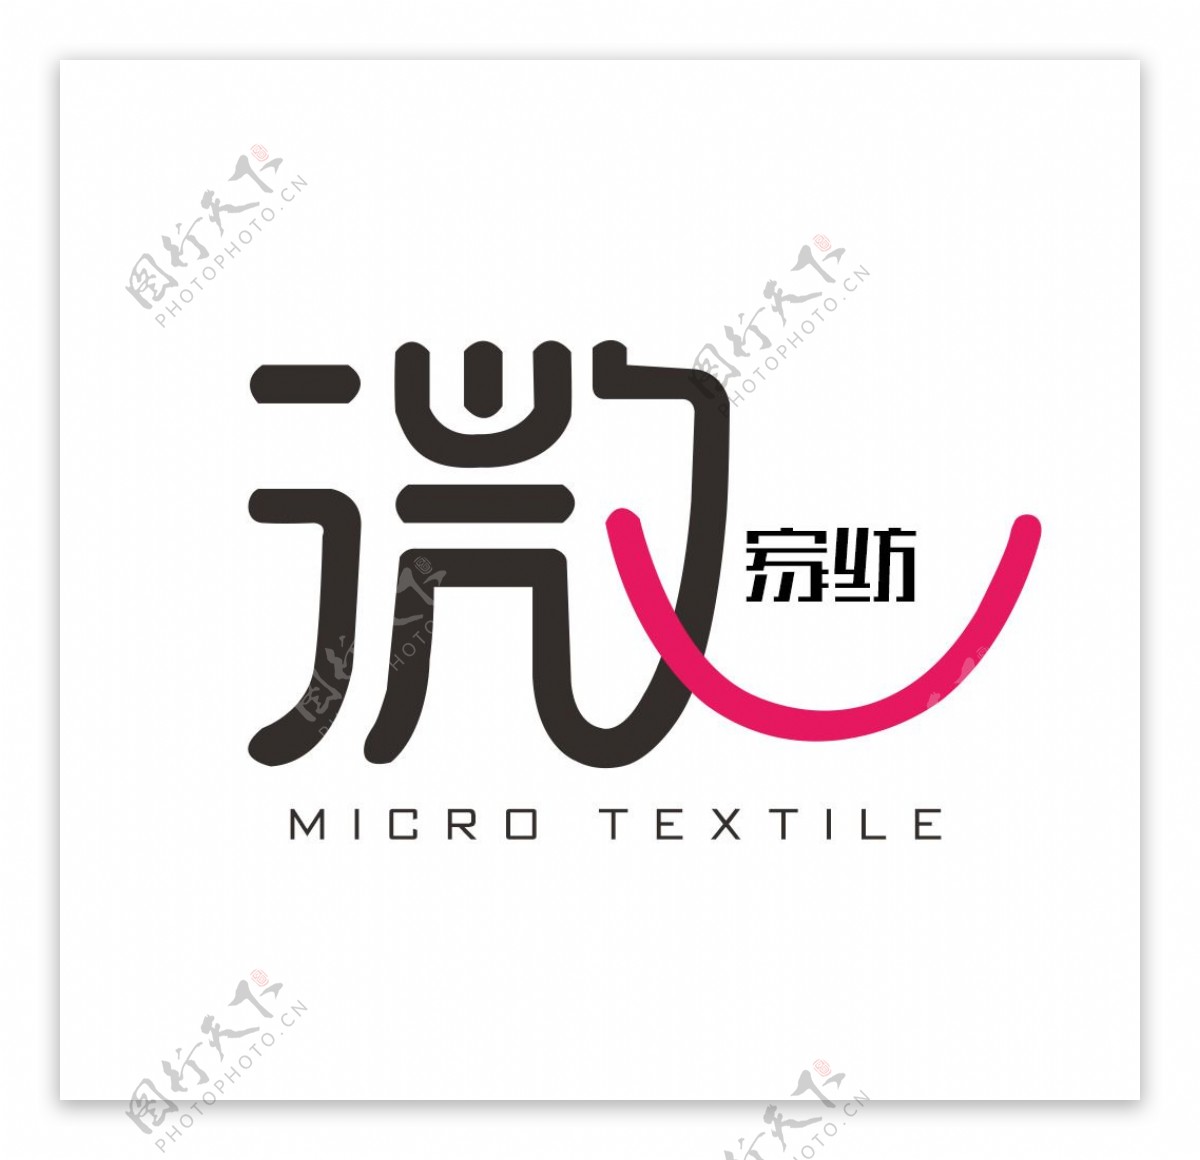 微家纺logo